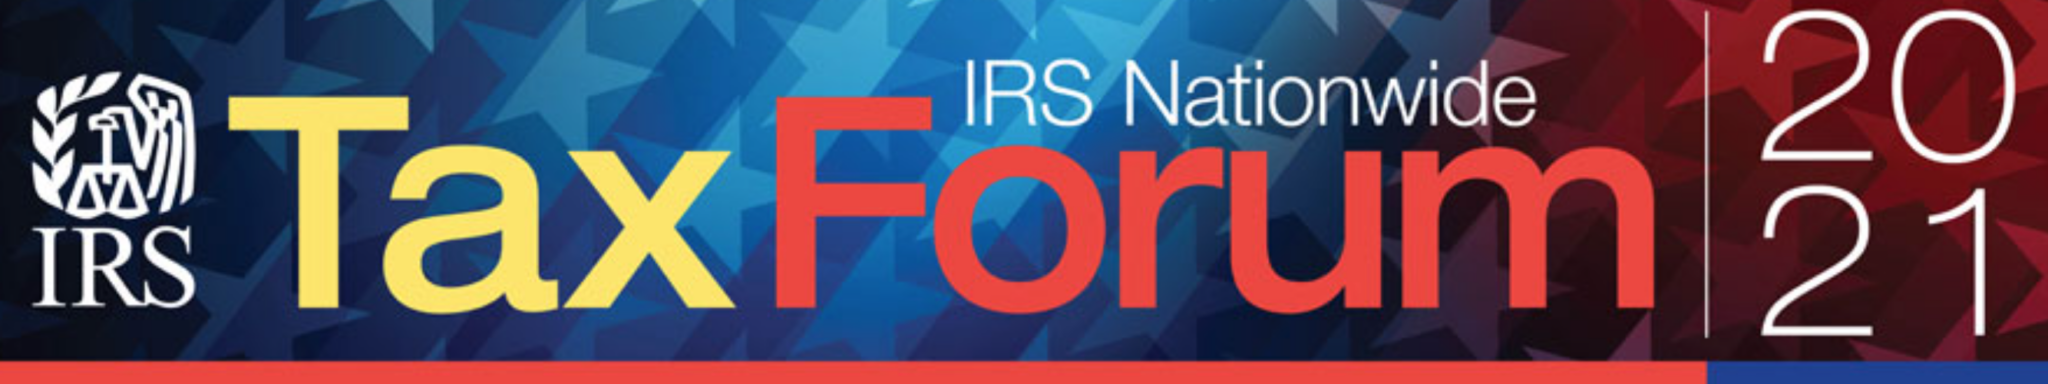 IRS Tax Forum - OfficeTools